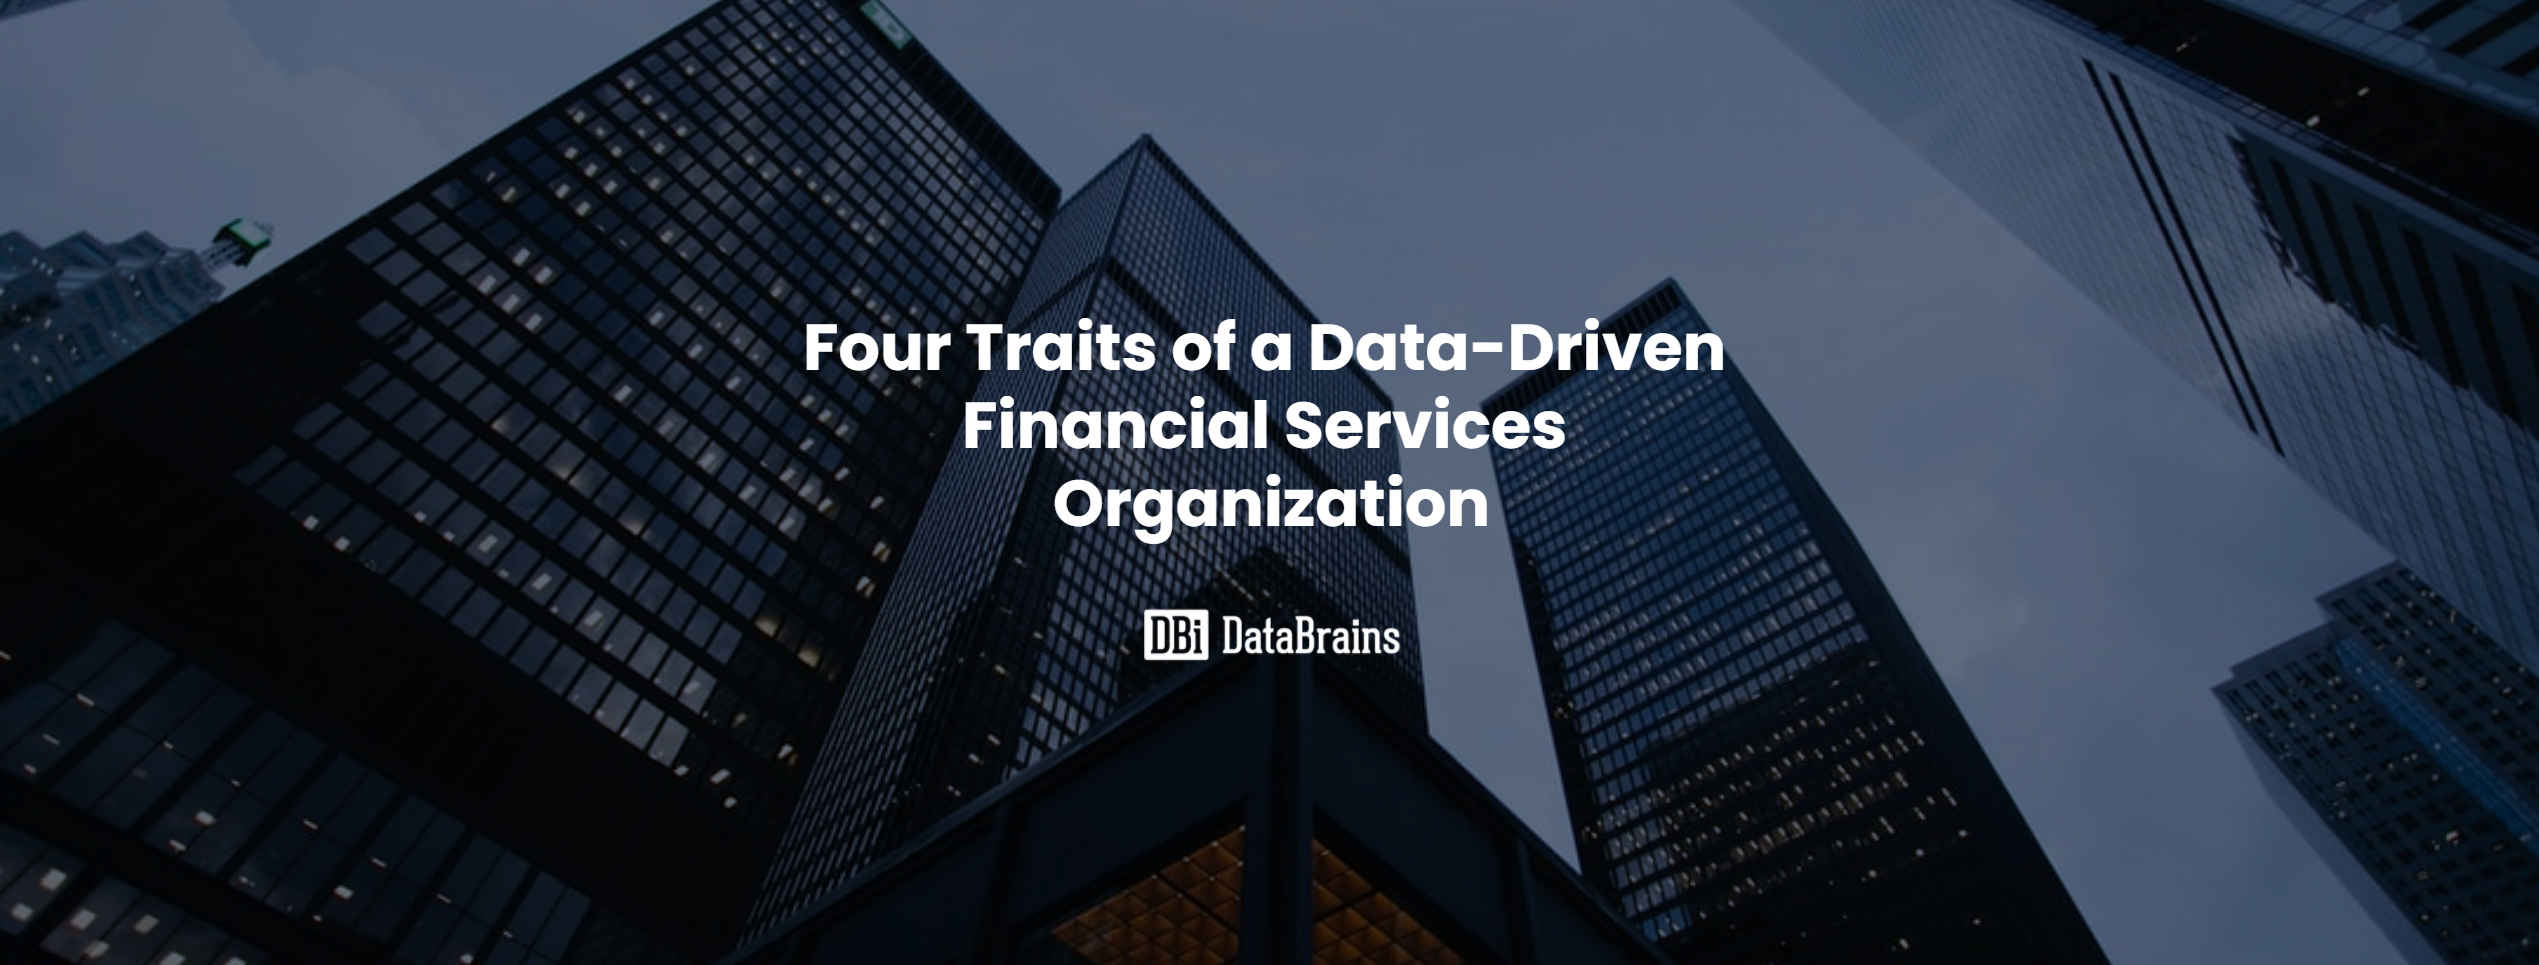 Four Traits of a Data-Driven Financial Organization